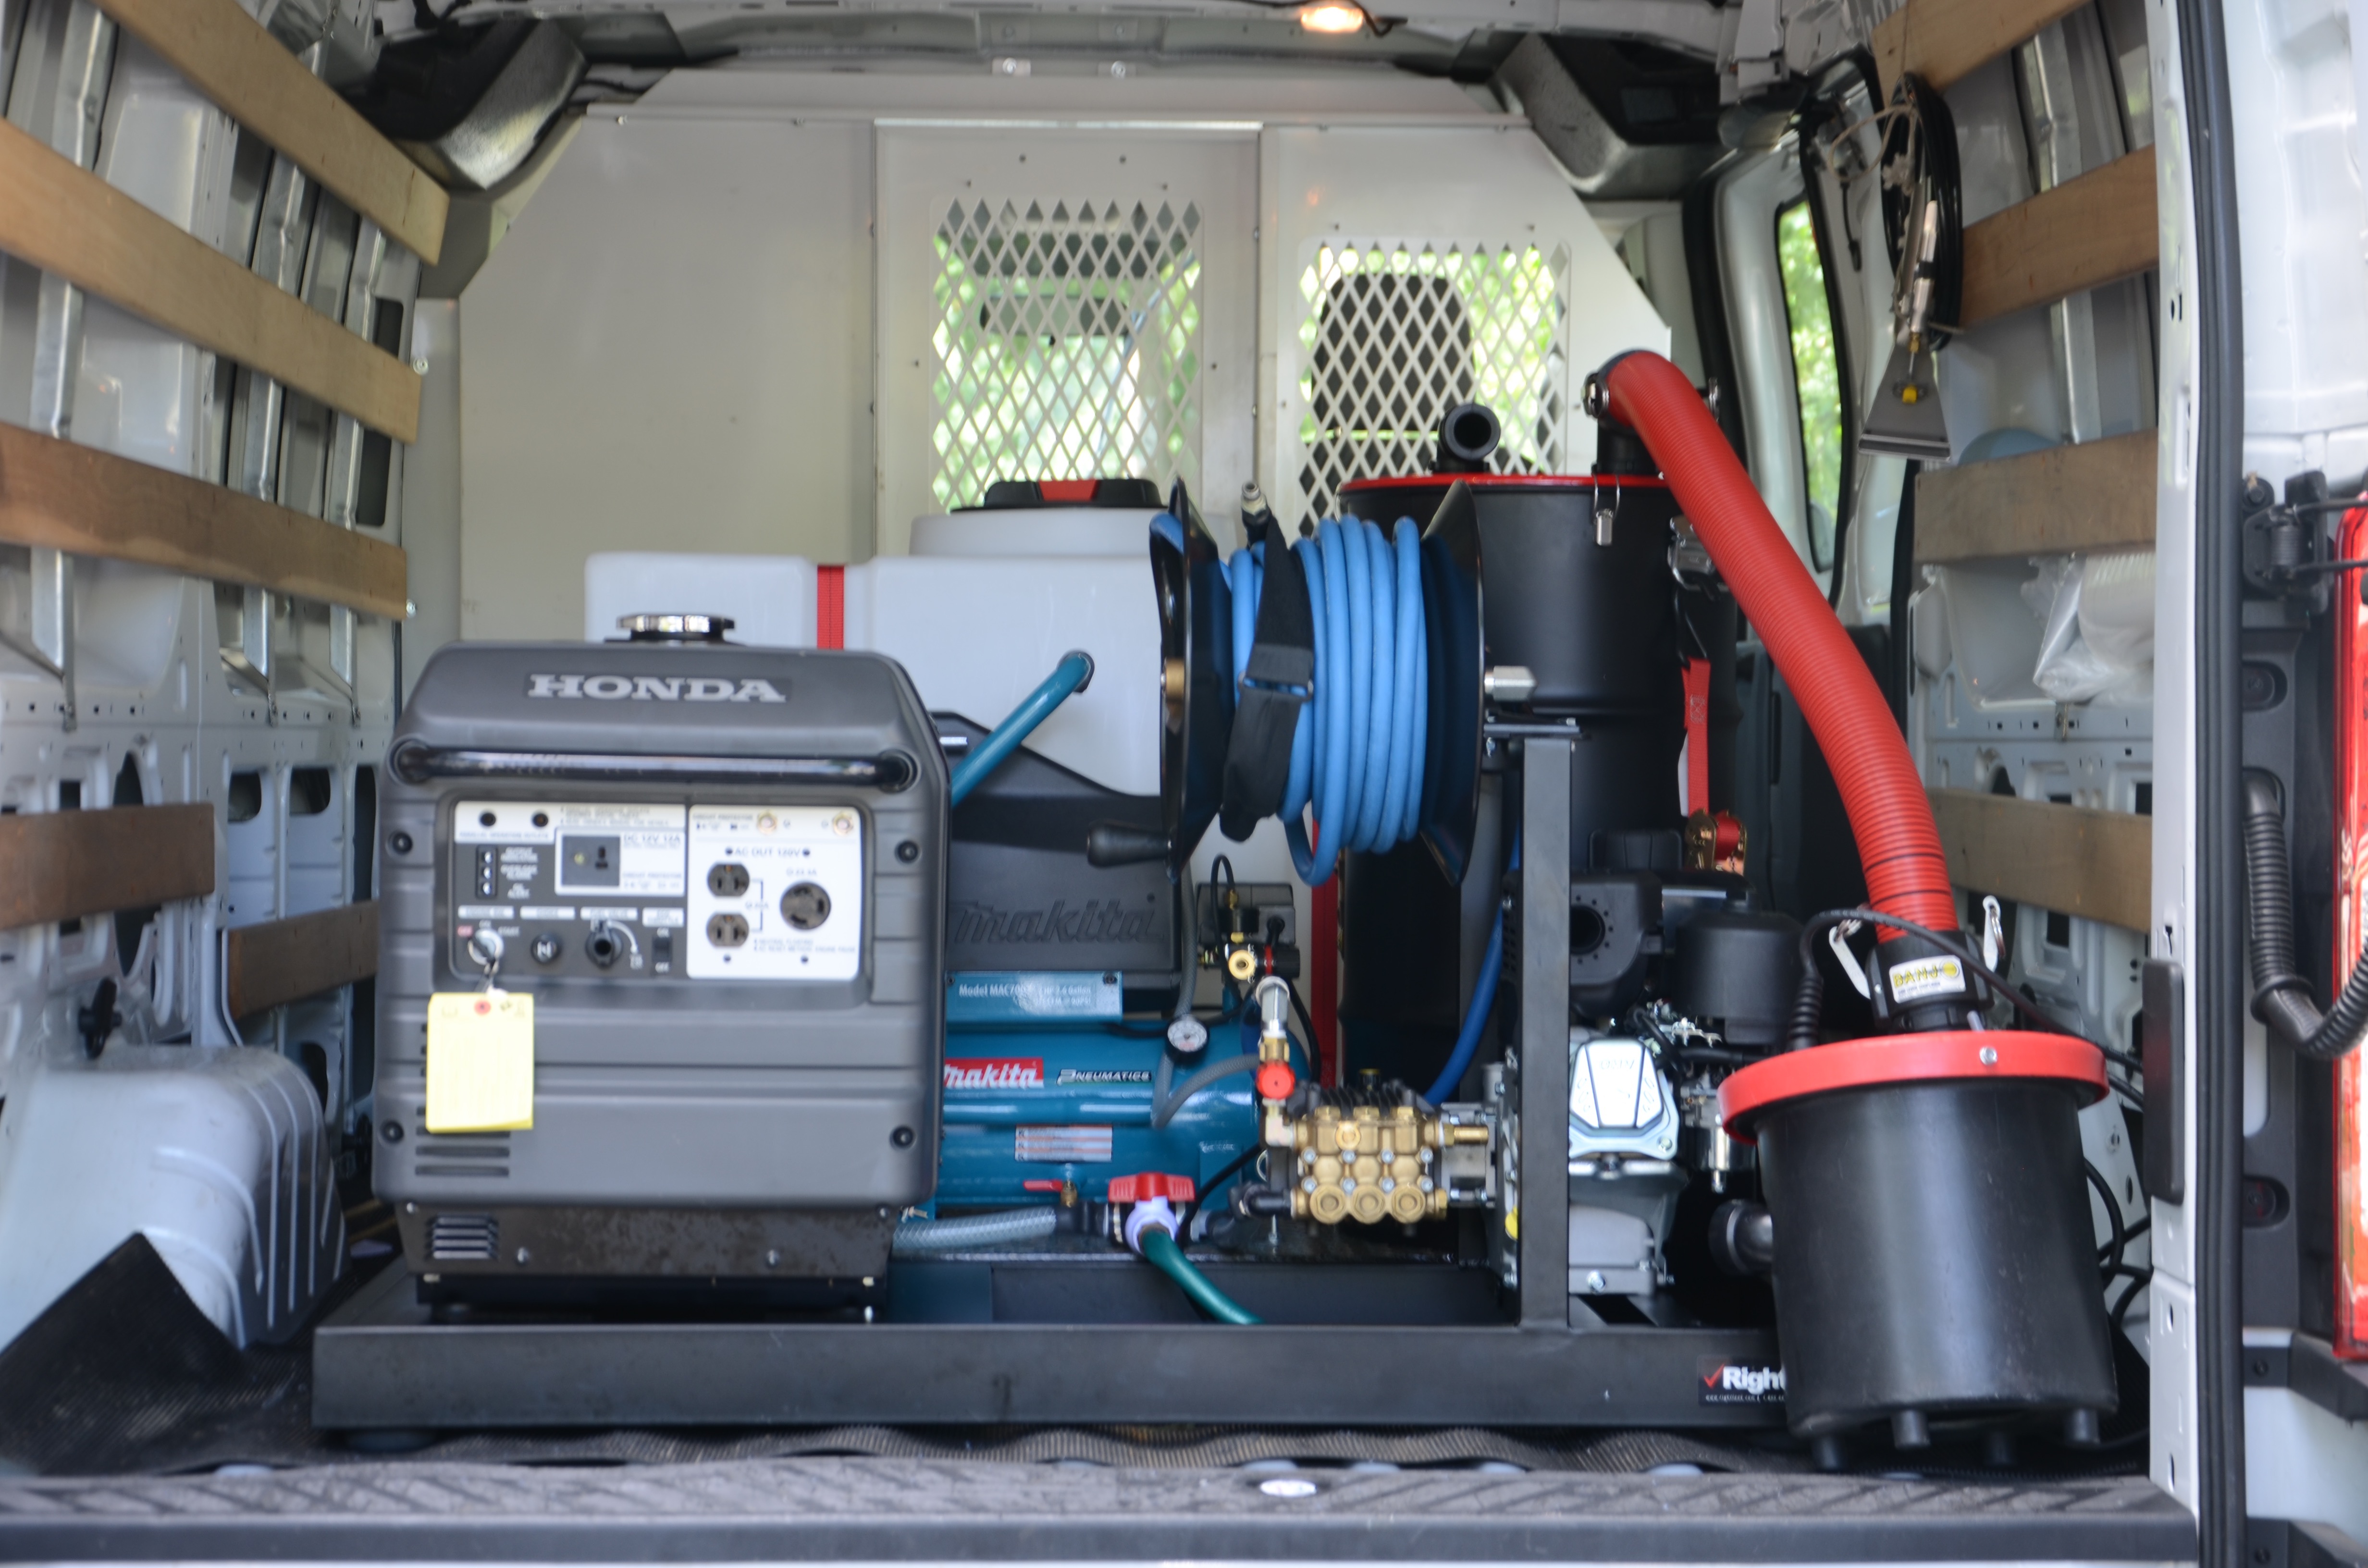 mobile car detailing equipment van including generator, power washer, water source, and vacuum